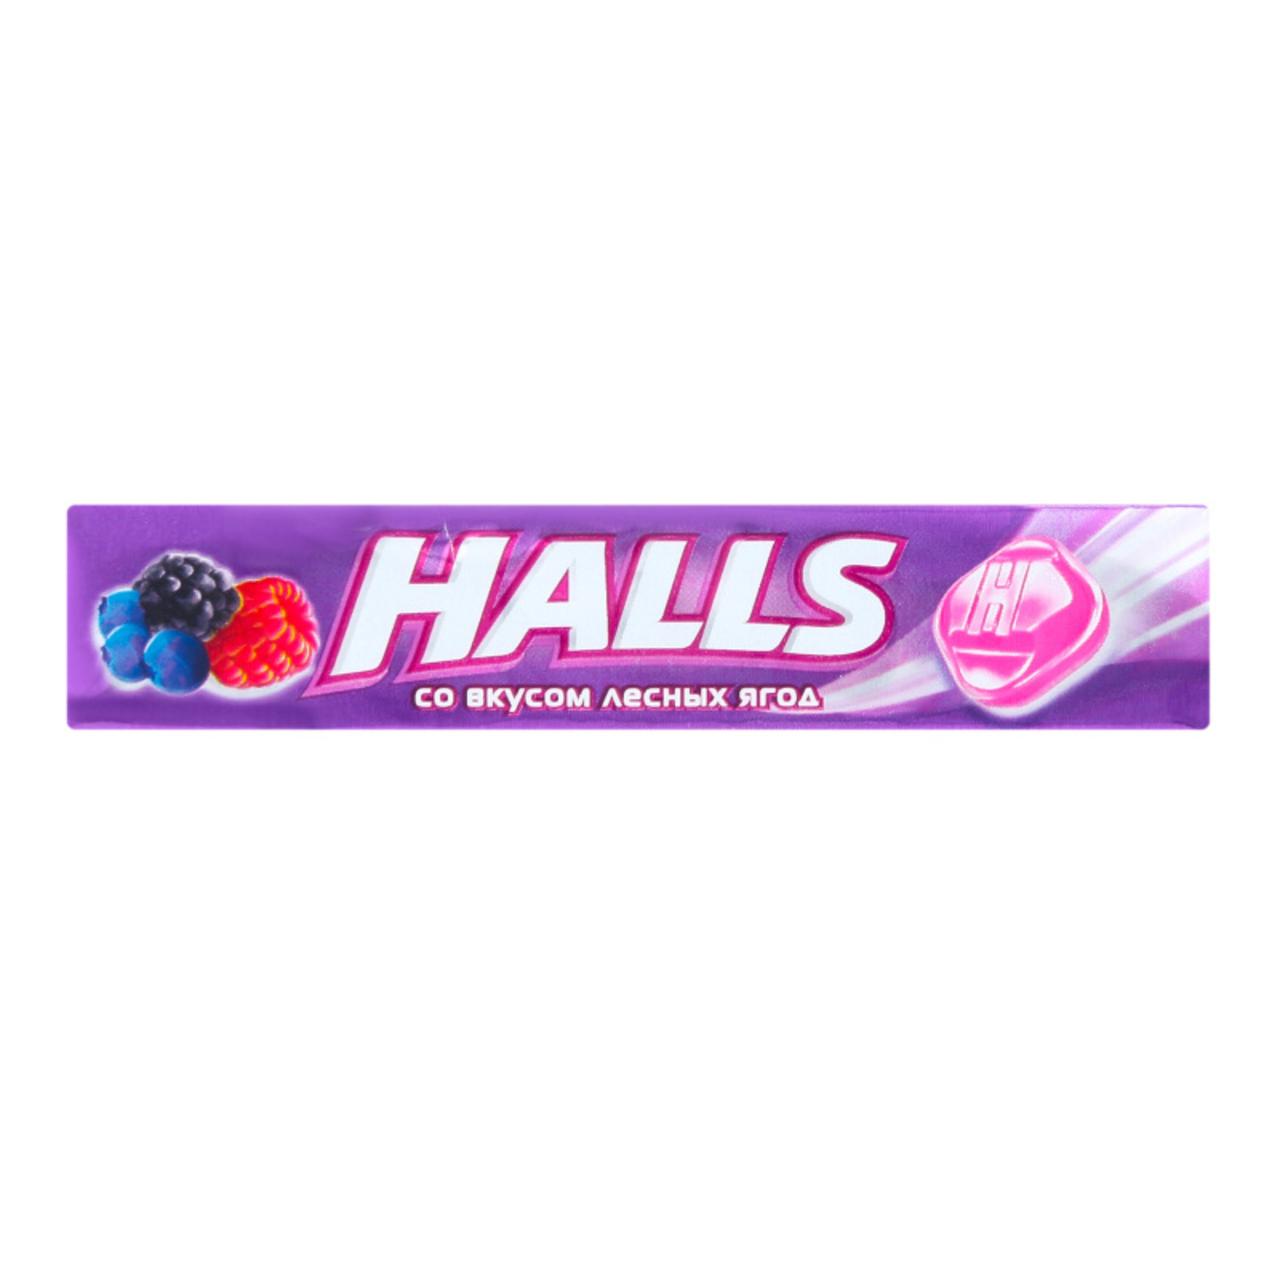 Halls вкусы. Леденцы Halls Лесные ягоды 25 гр. Halls конфеты. Halls со вкусом лесных ягод.